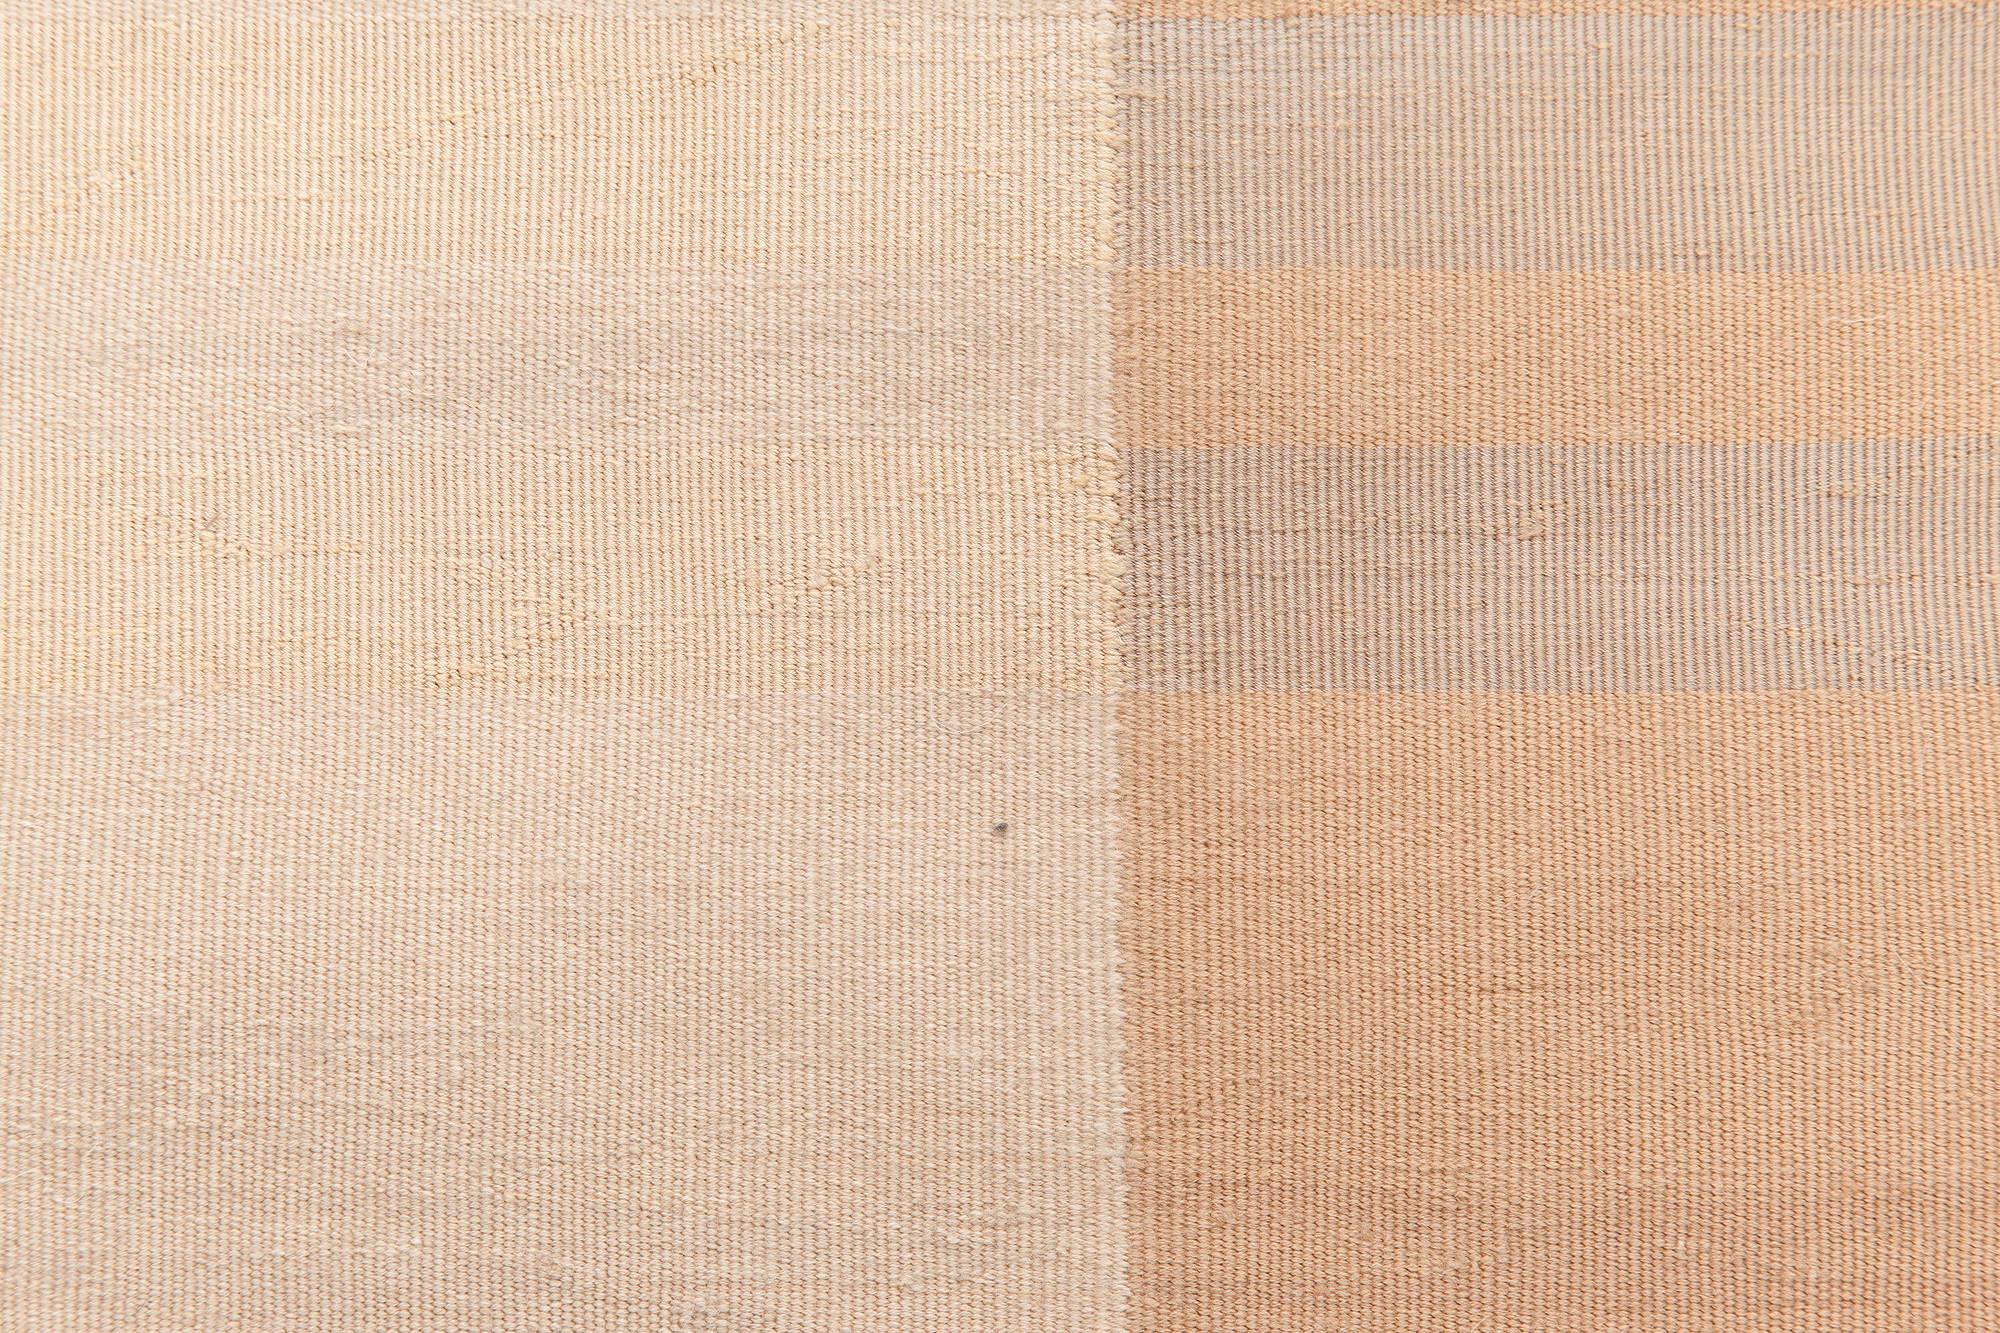 Contemporary geometric beige, white flat-weave wool rug by Doris Leslie Blau.
Size: 4'0